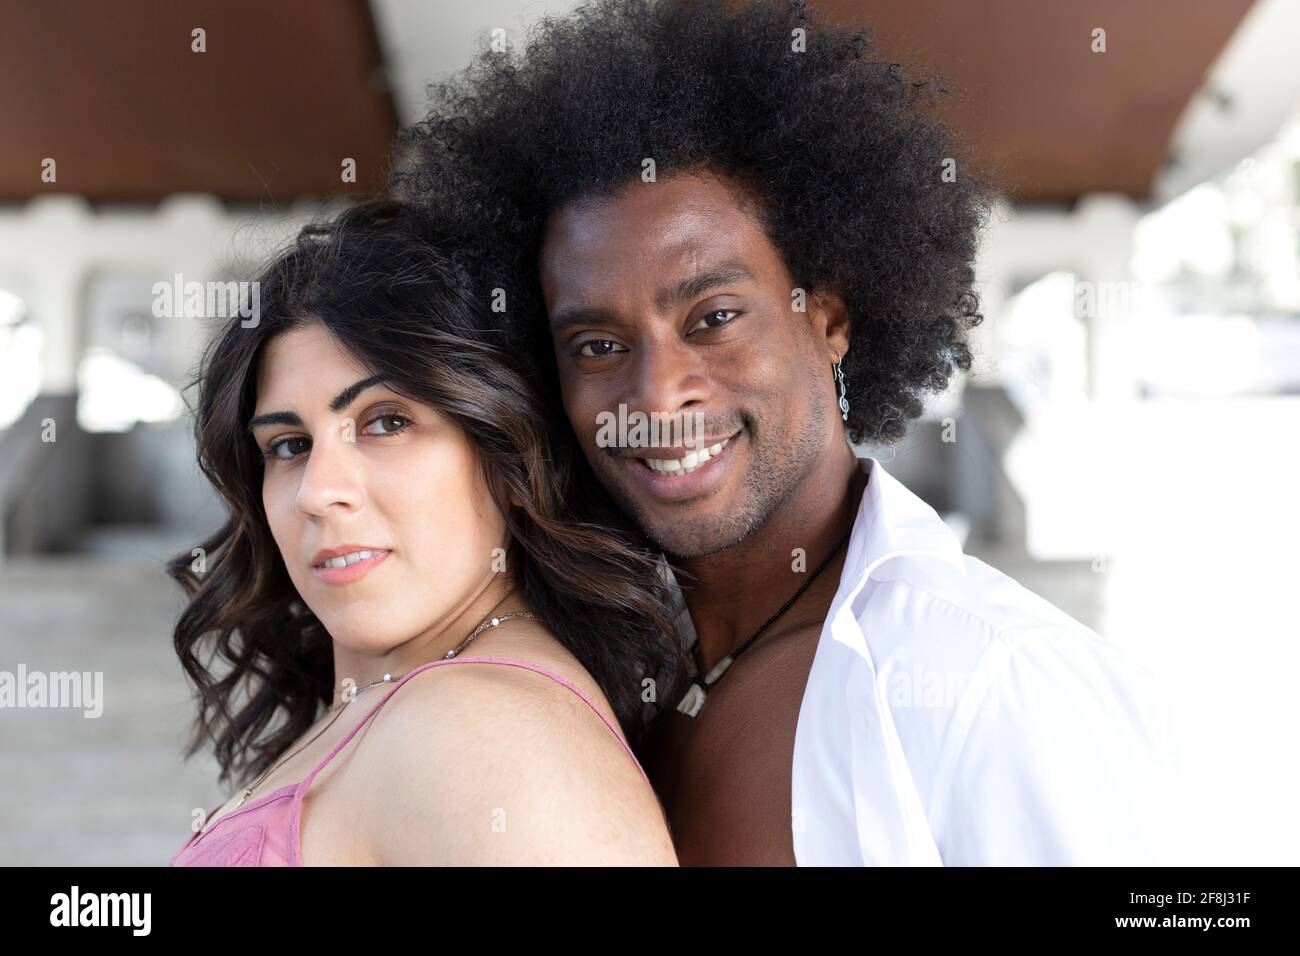 Close up portrait of black man and caucasian woman. Concept of multiethnic couple. Stock Photo